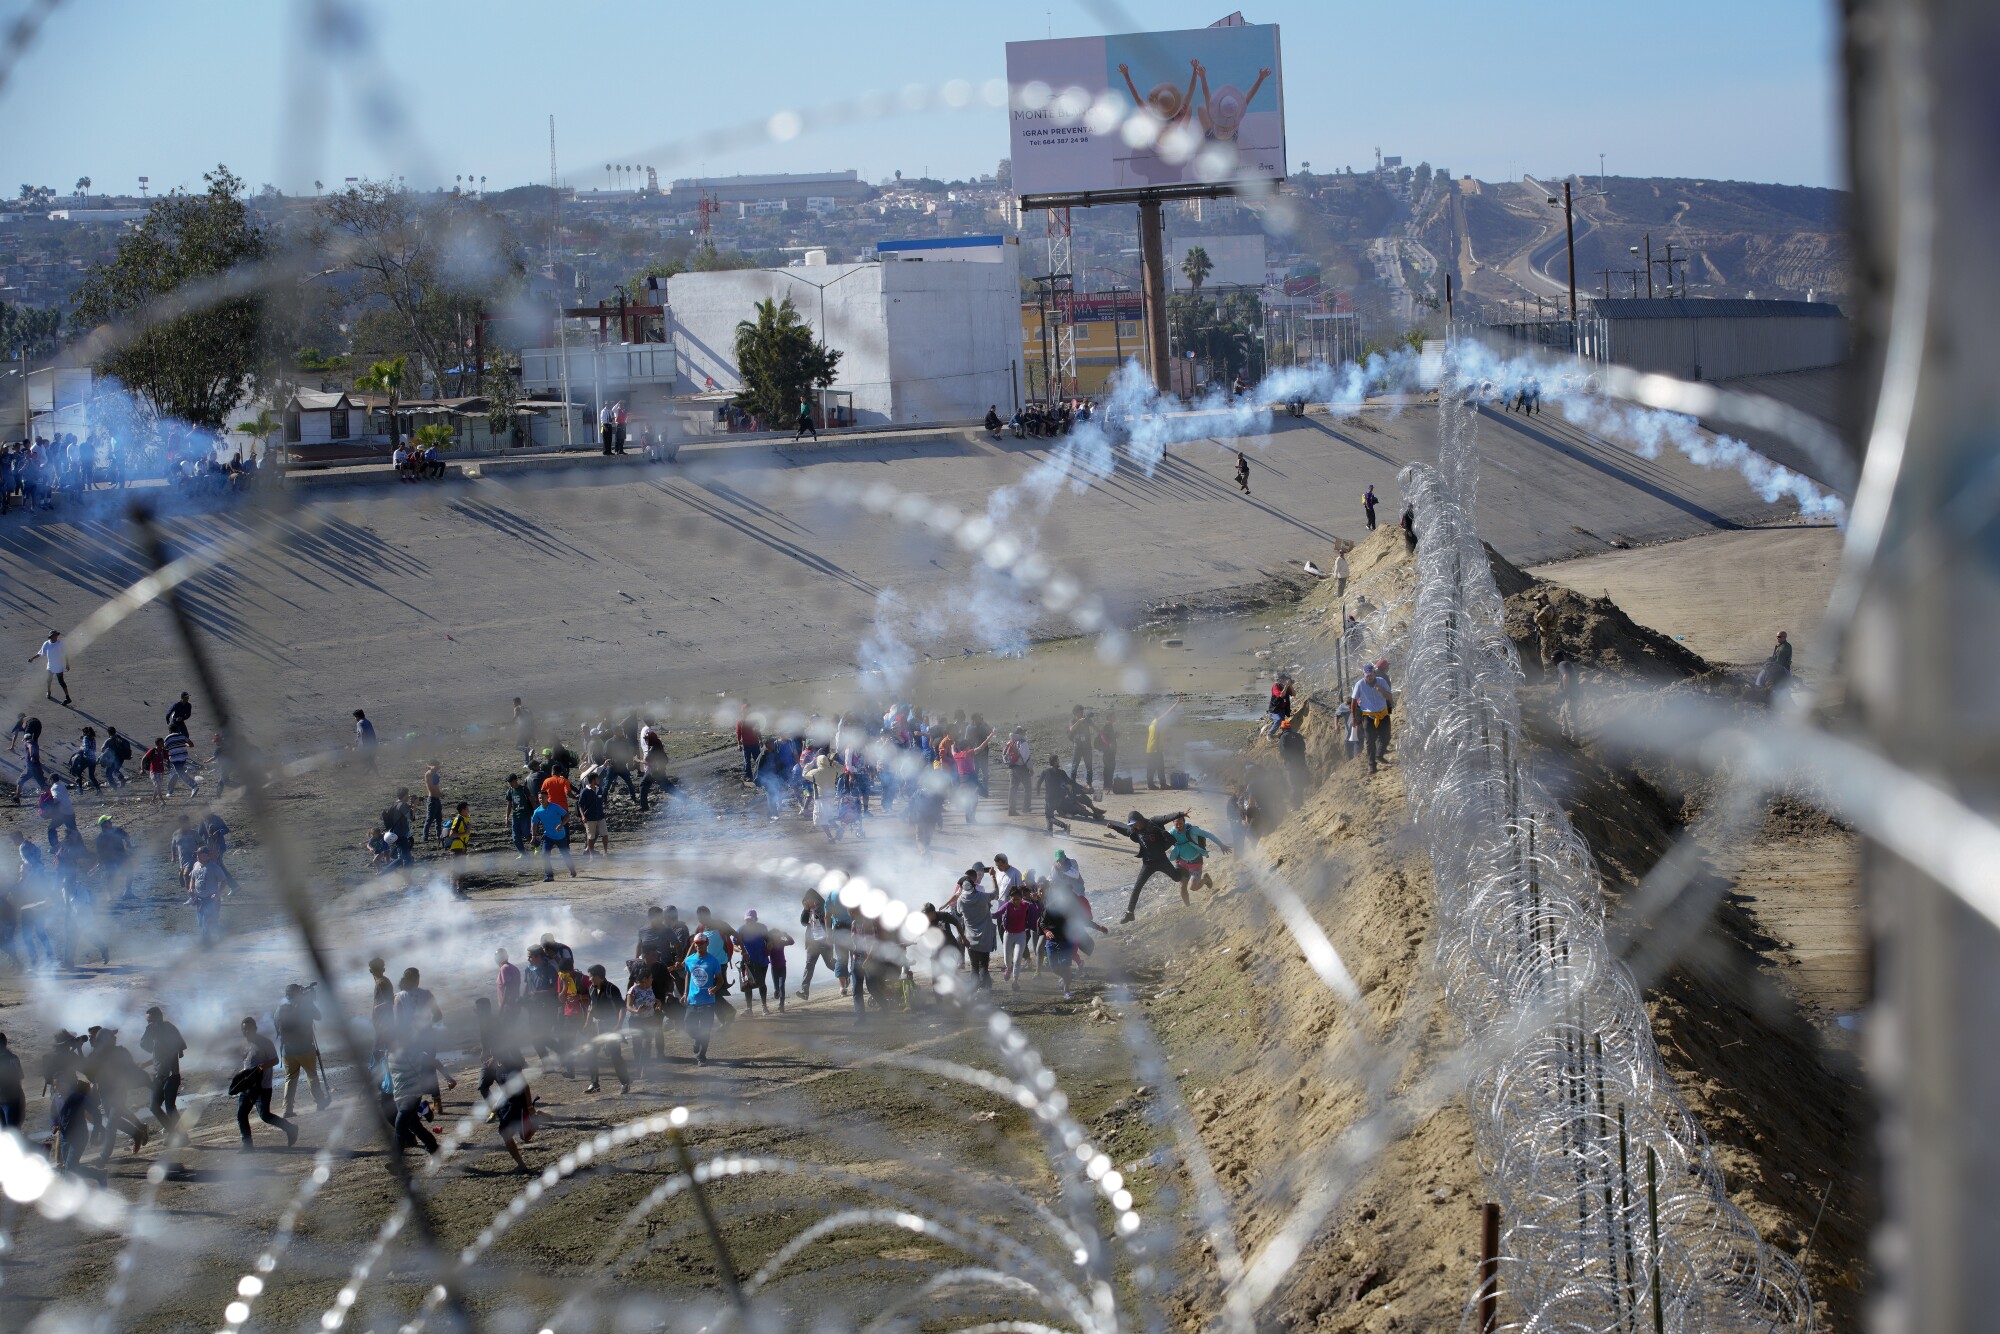 Seen through concertina wire, U.S. Border Patrol deploy CS gas on migrants at the U.S. - Mexico border near San Ysidro.